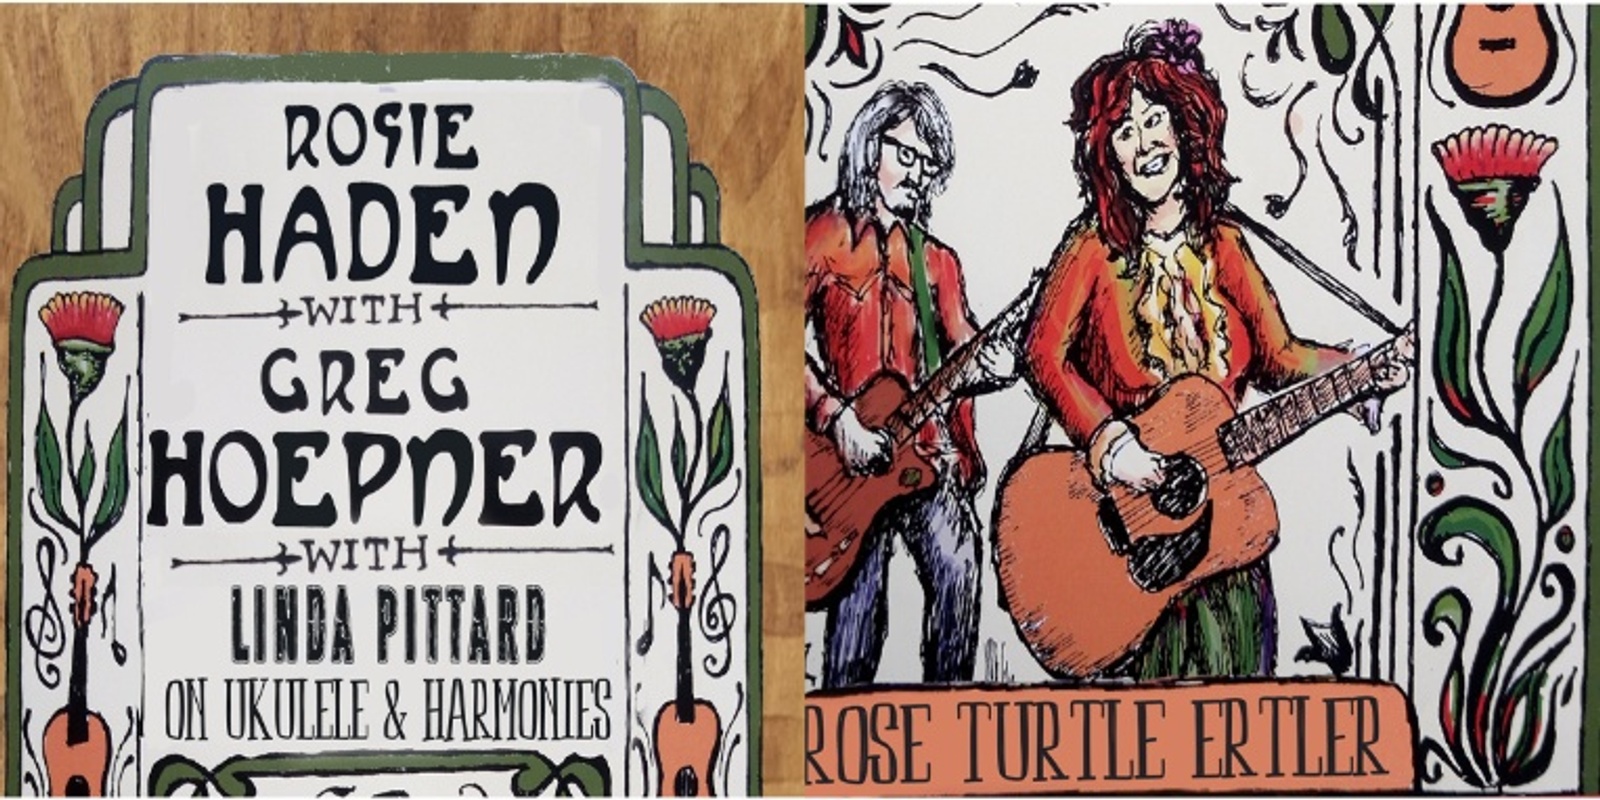 Banner image for ROSIE HADEN with GREG HOEPNER & LINDA PITTARD // ROSE TURTLE ERTLER